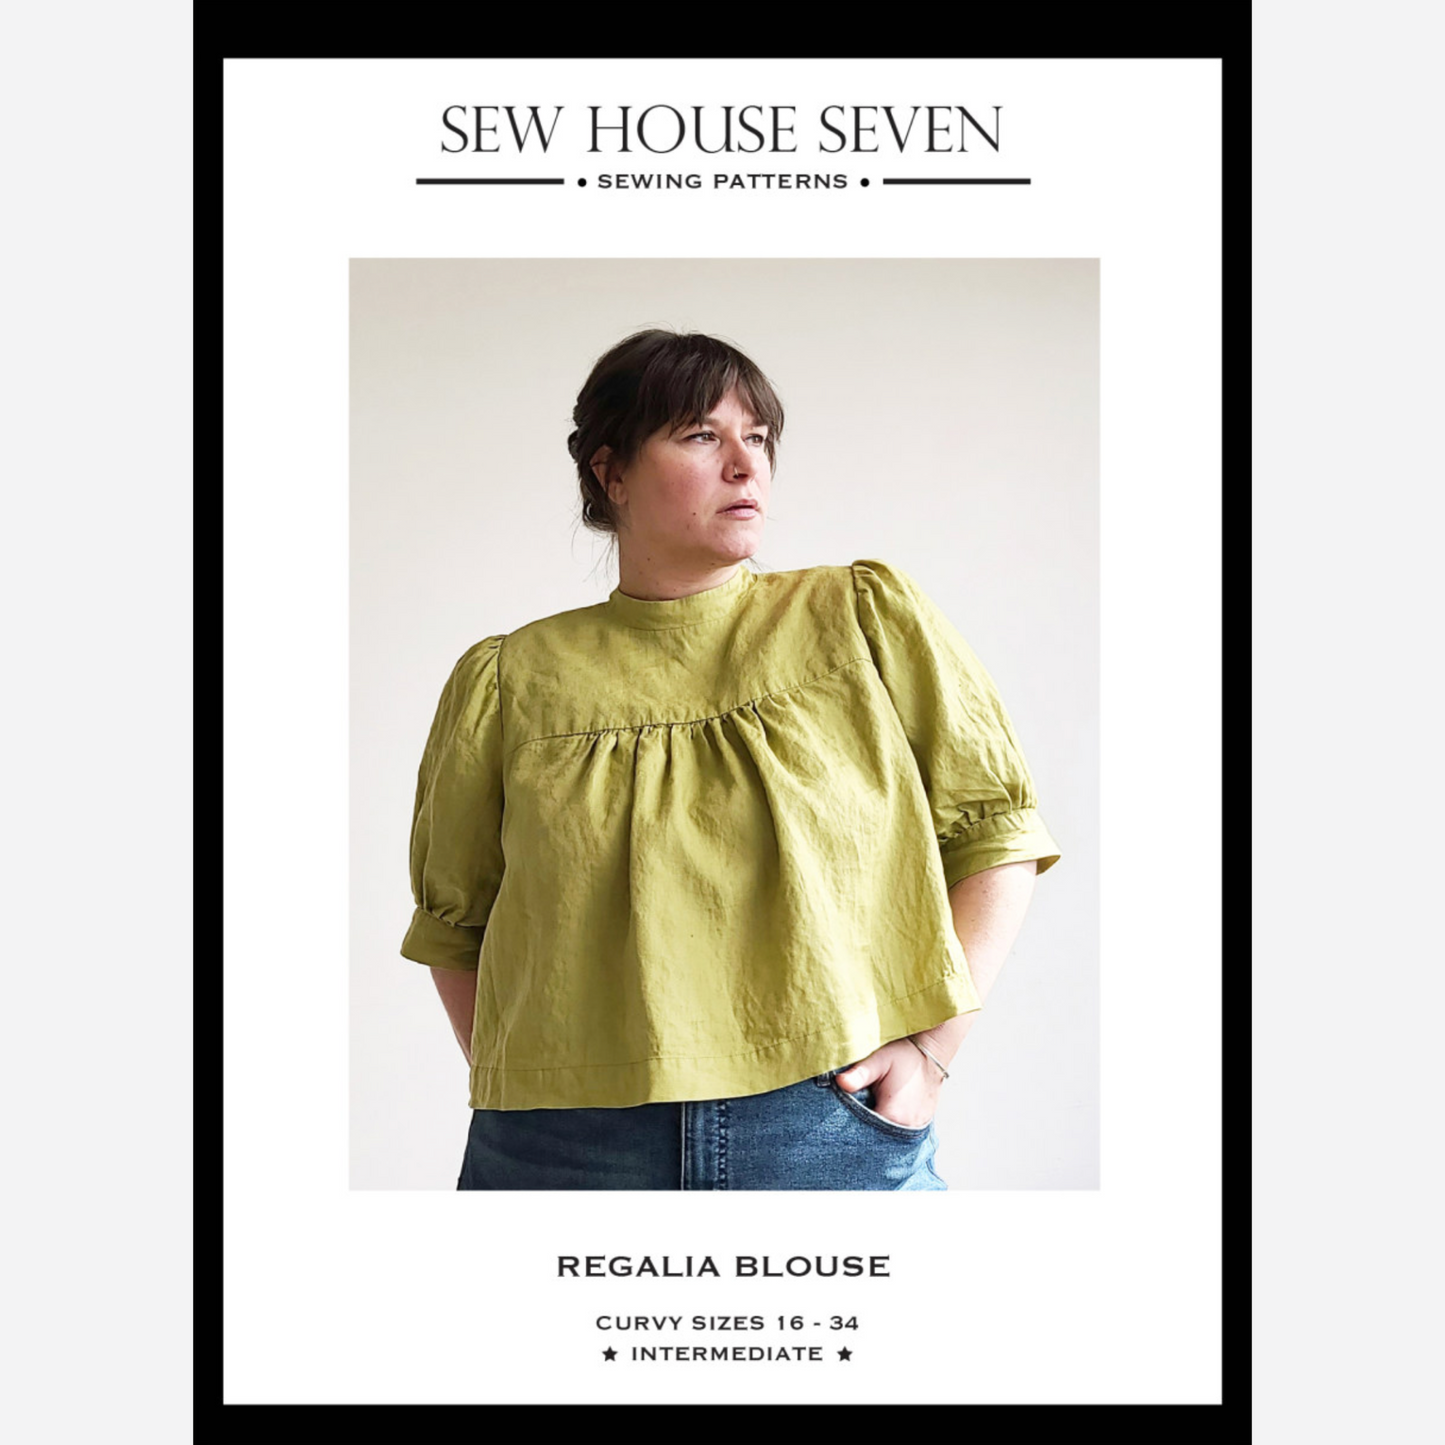 Regalia Blouse - Sew House Seven